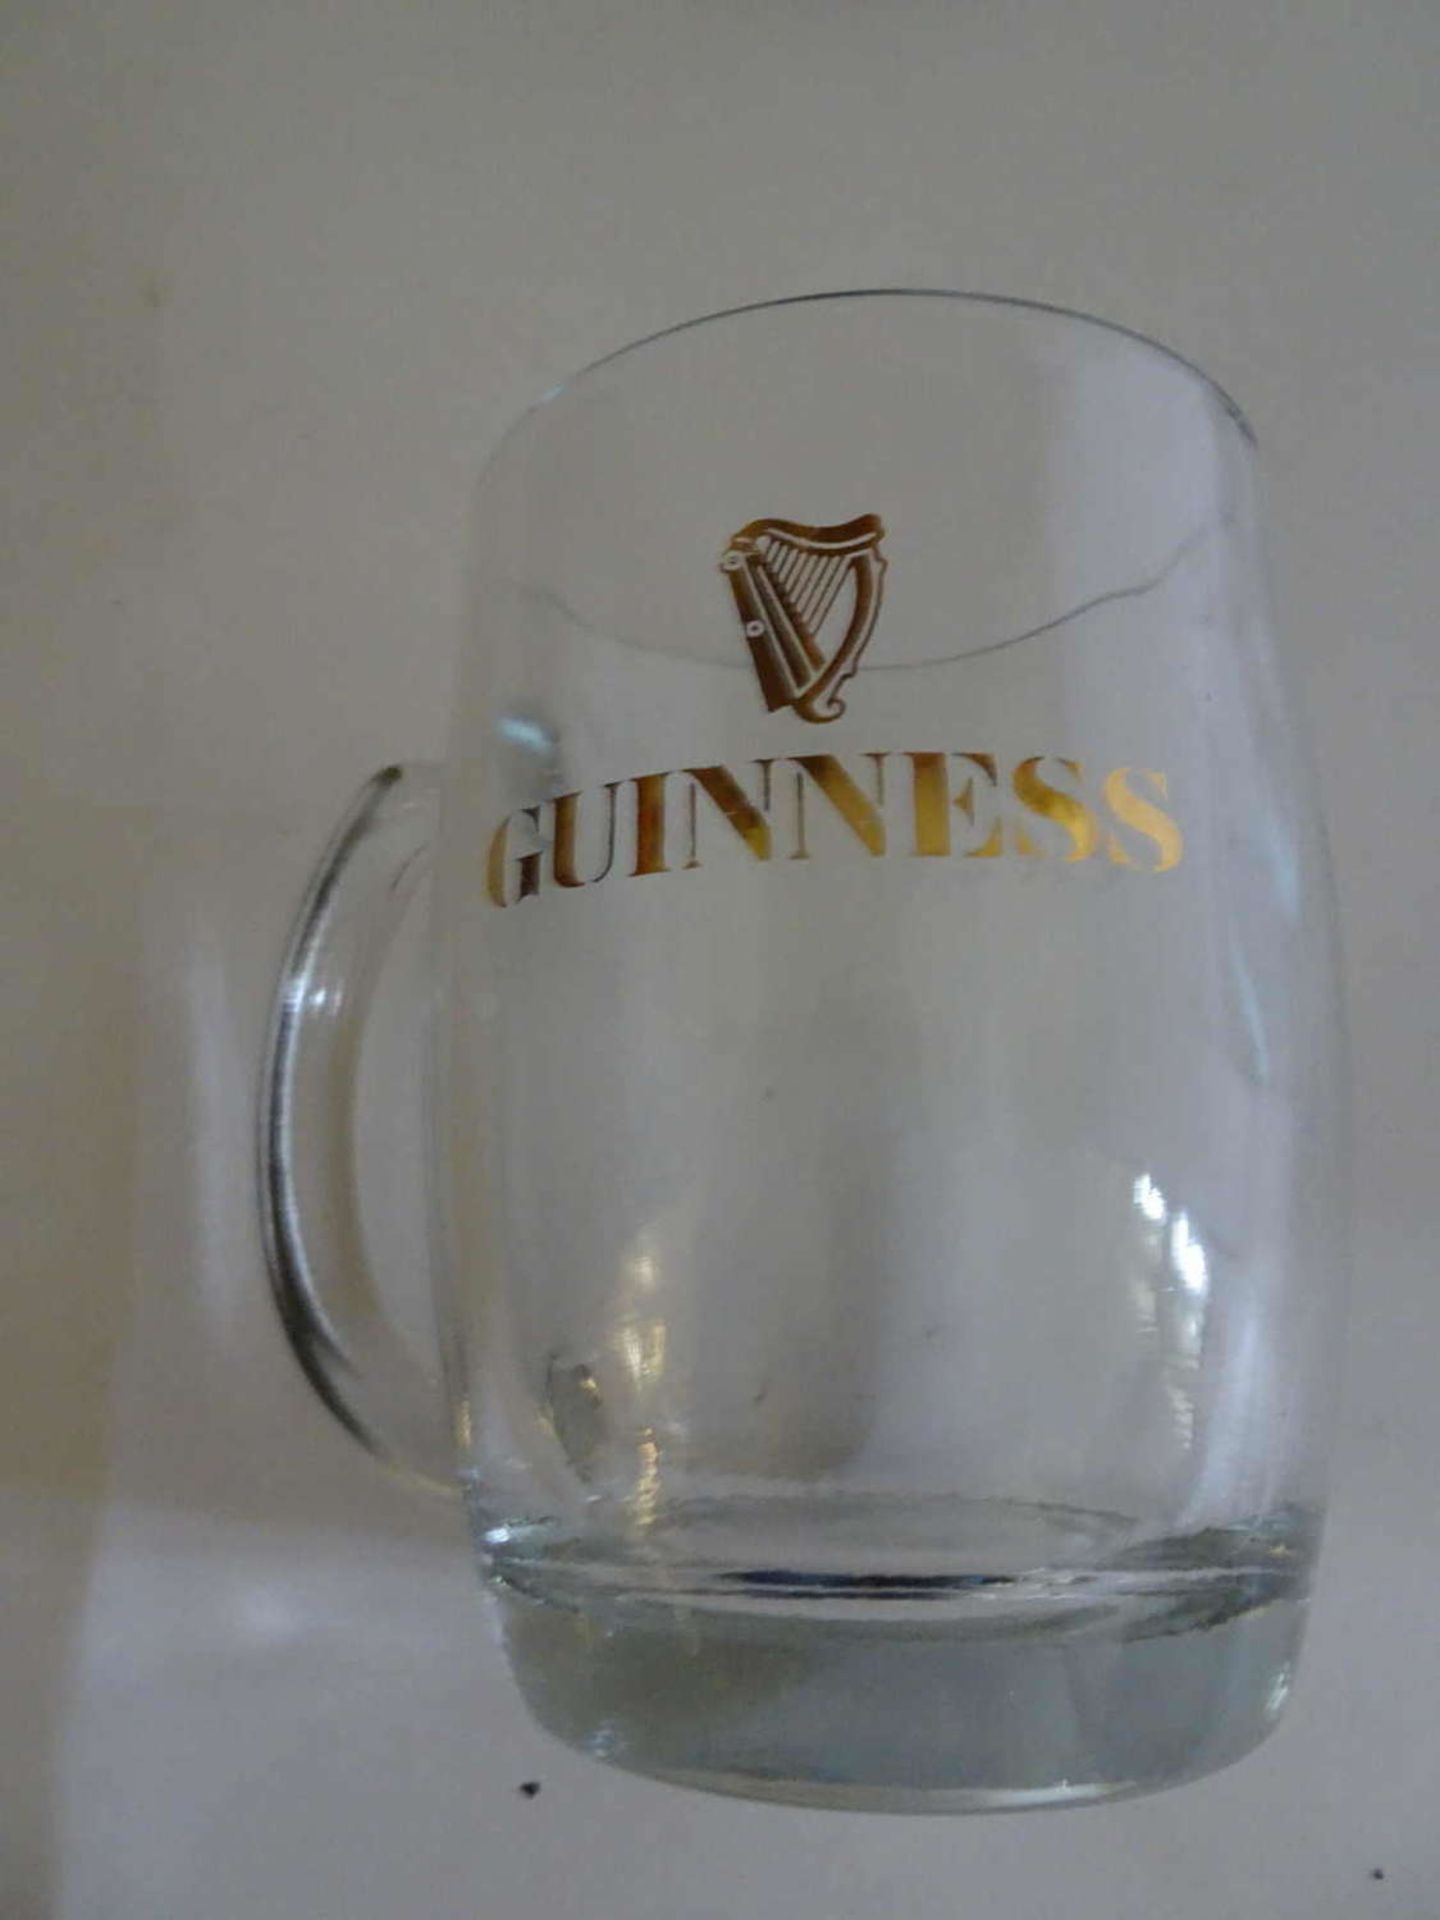 5 older Guiness glasses for the beer connoisseur, 0,4 ltr. Calibration mark. Good condition. - Bild 2 aus 2